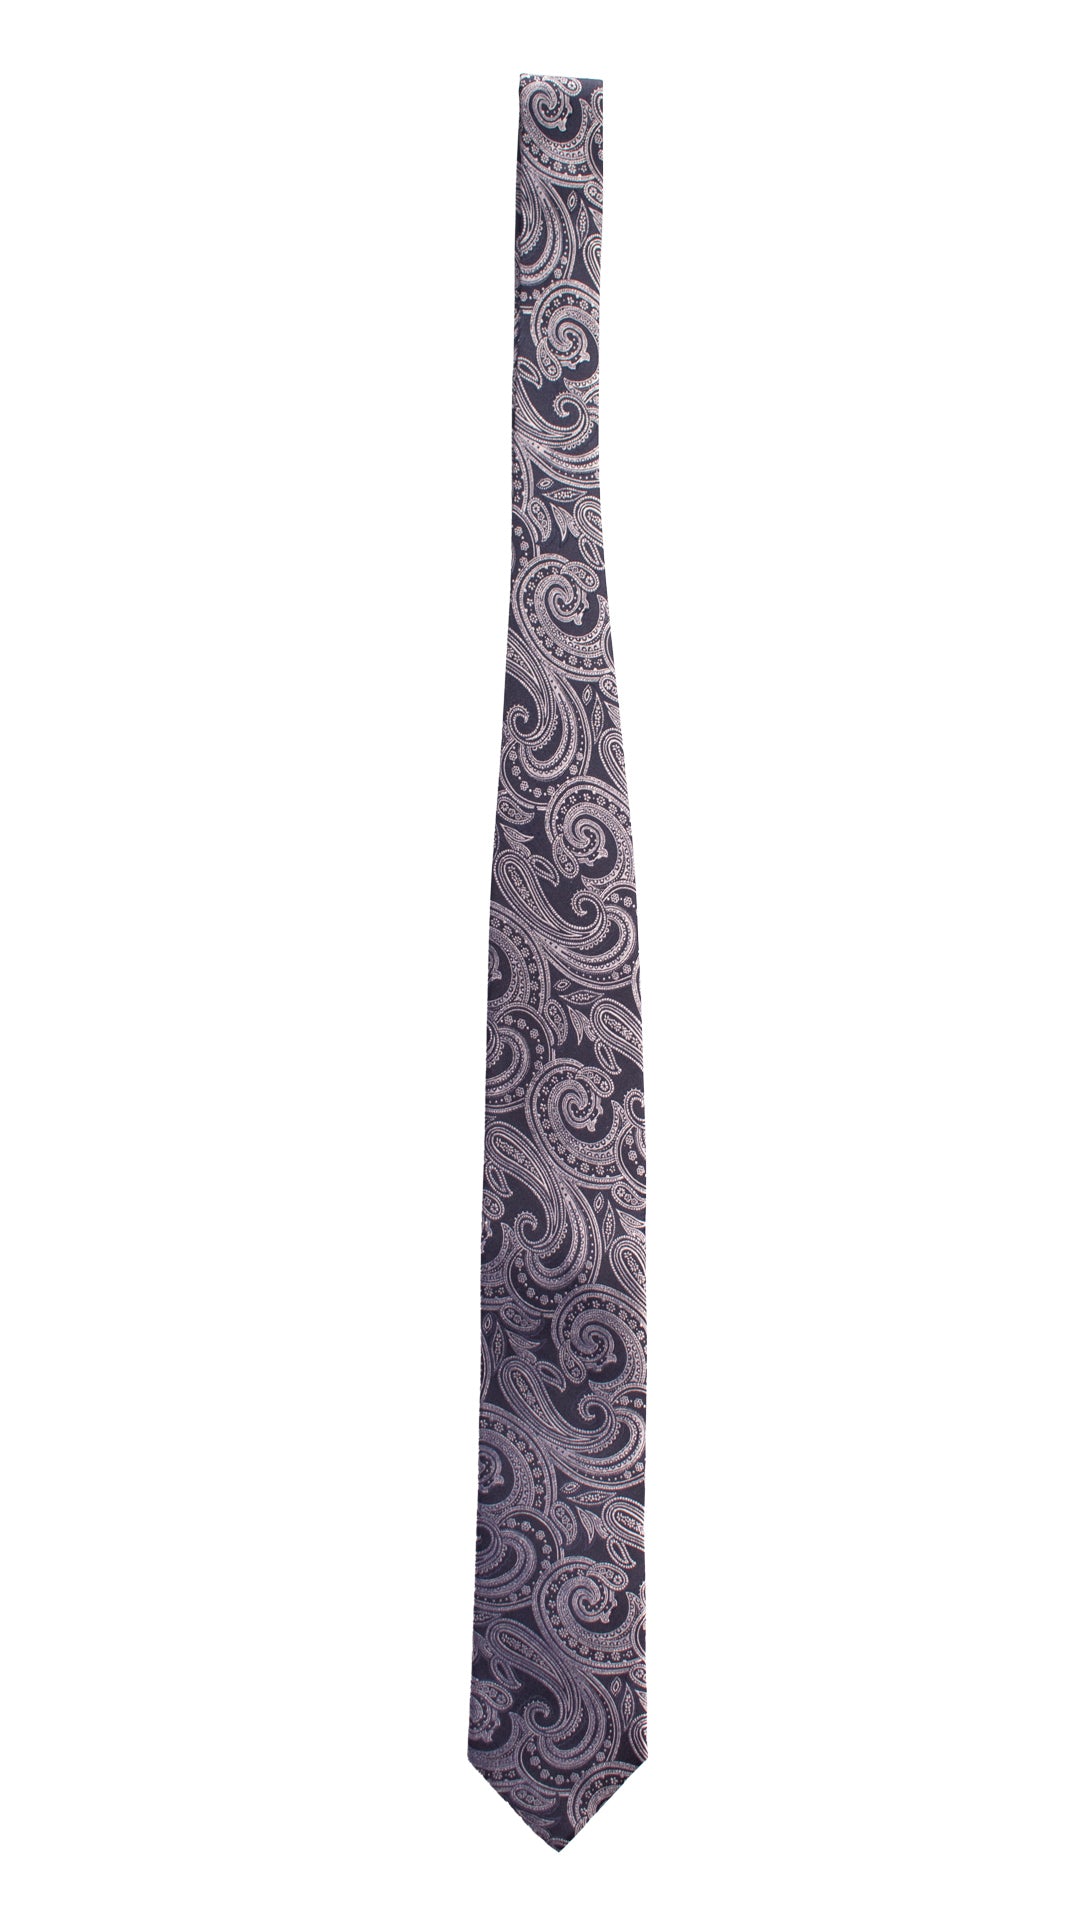 Cravatta da Cerimonia di Seta Blu Paisley Bianchi CY4546 Intera